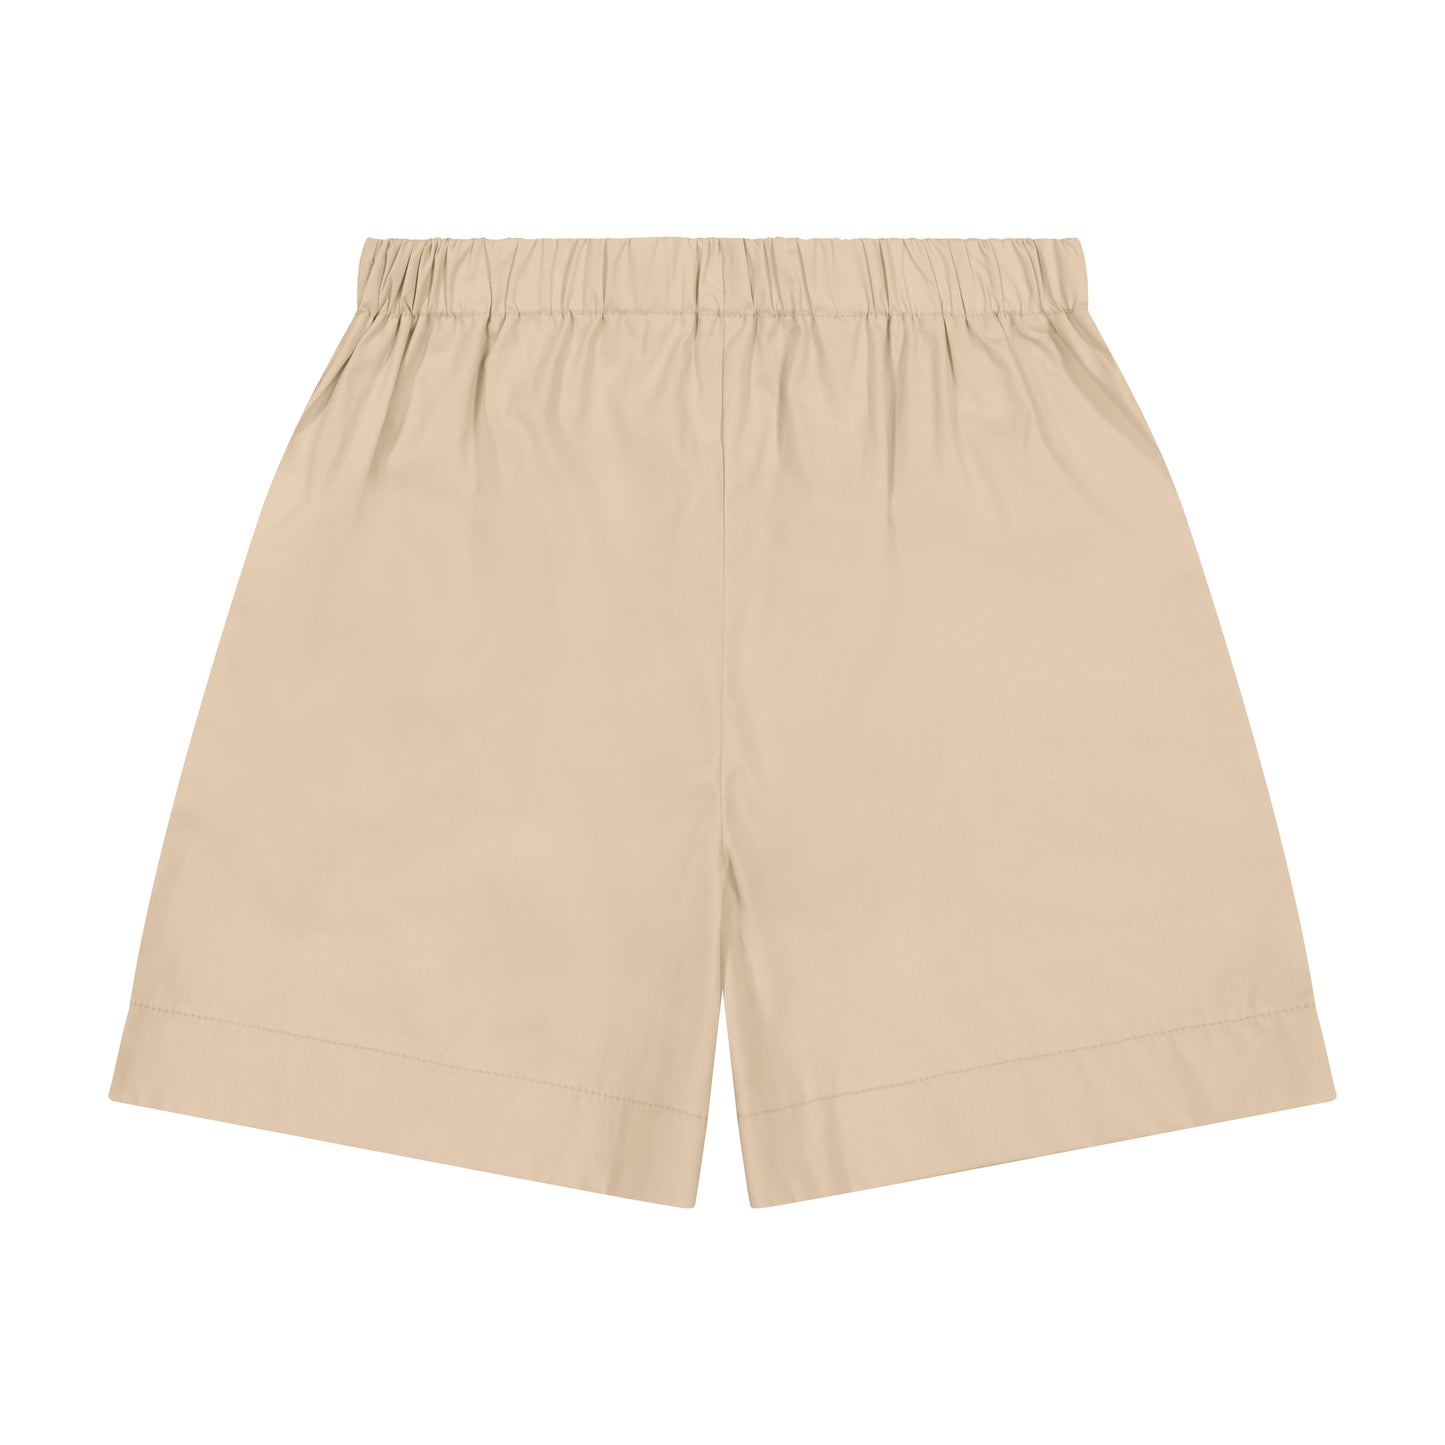 JD Pull-On Shorts Khaki Cotton Poplin